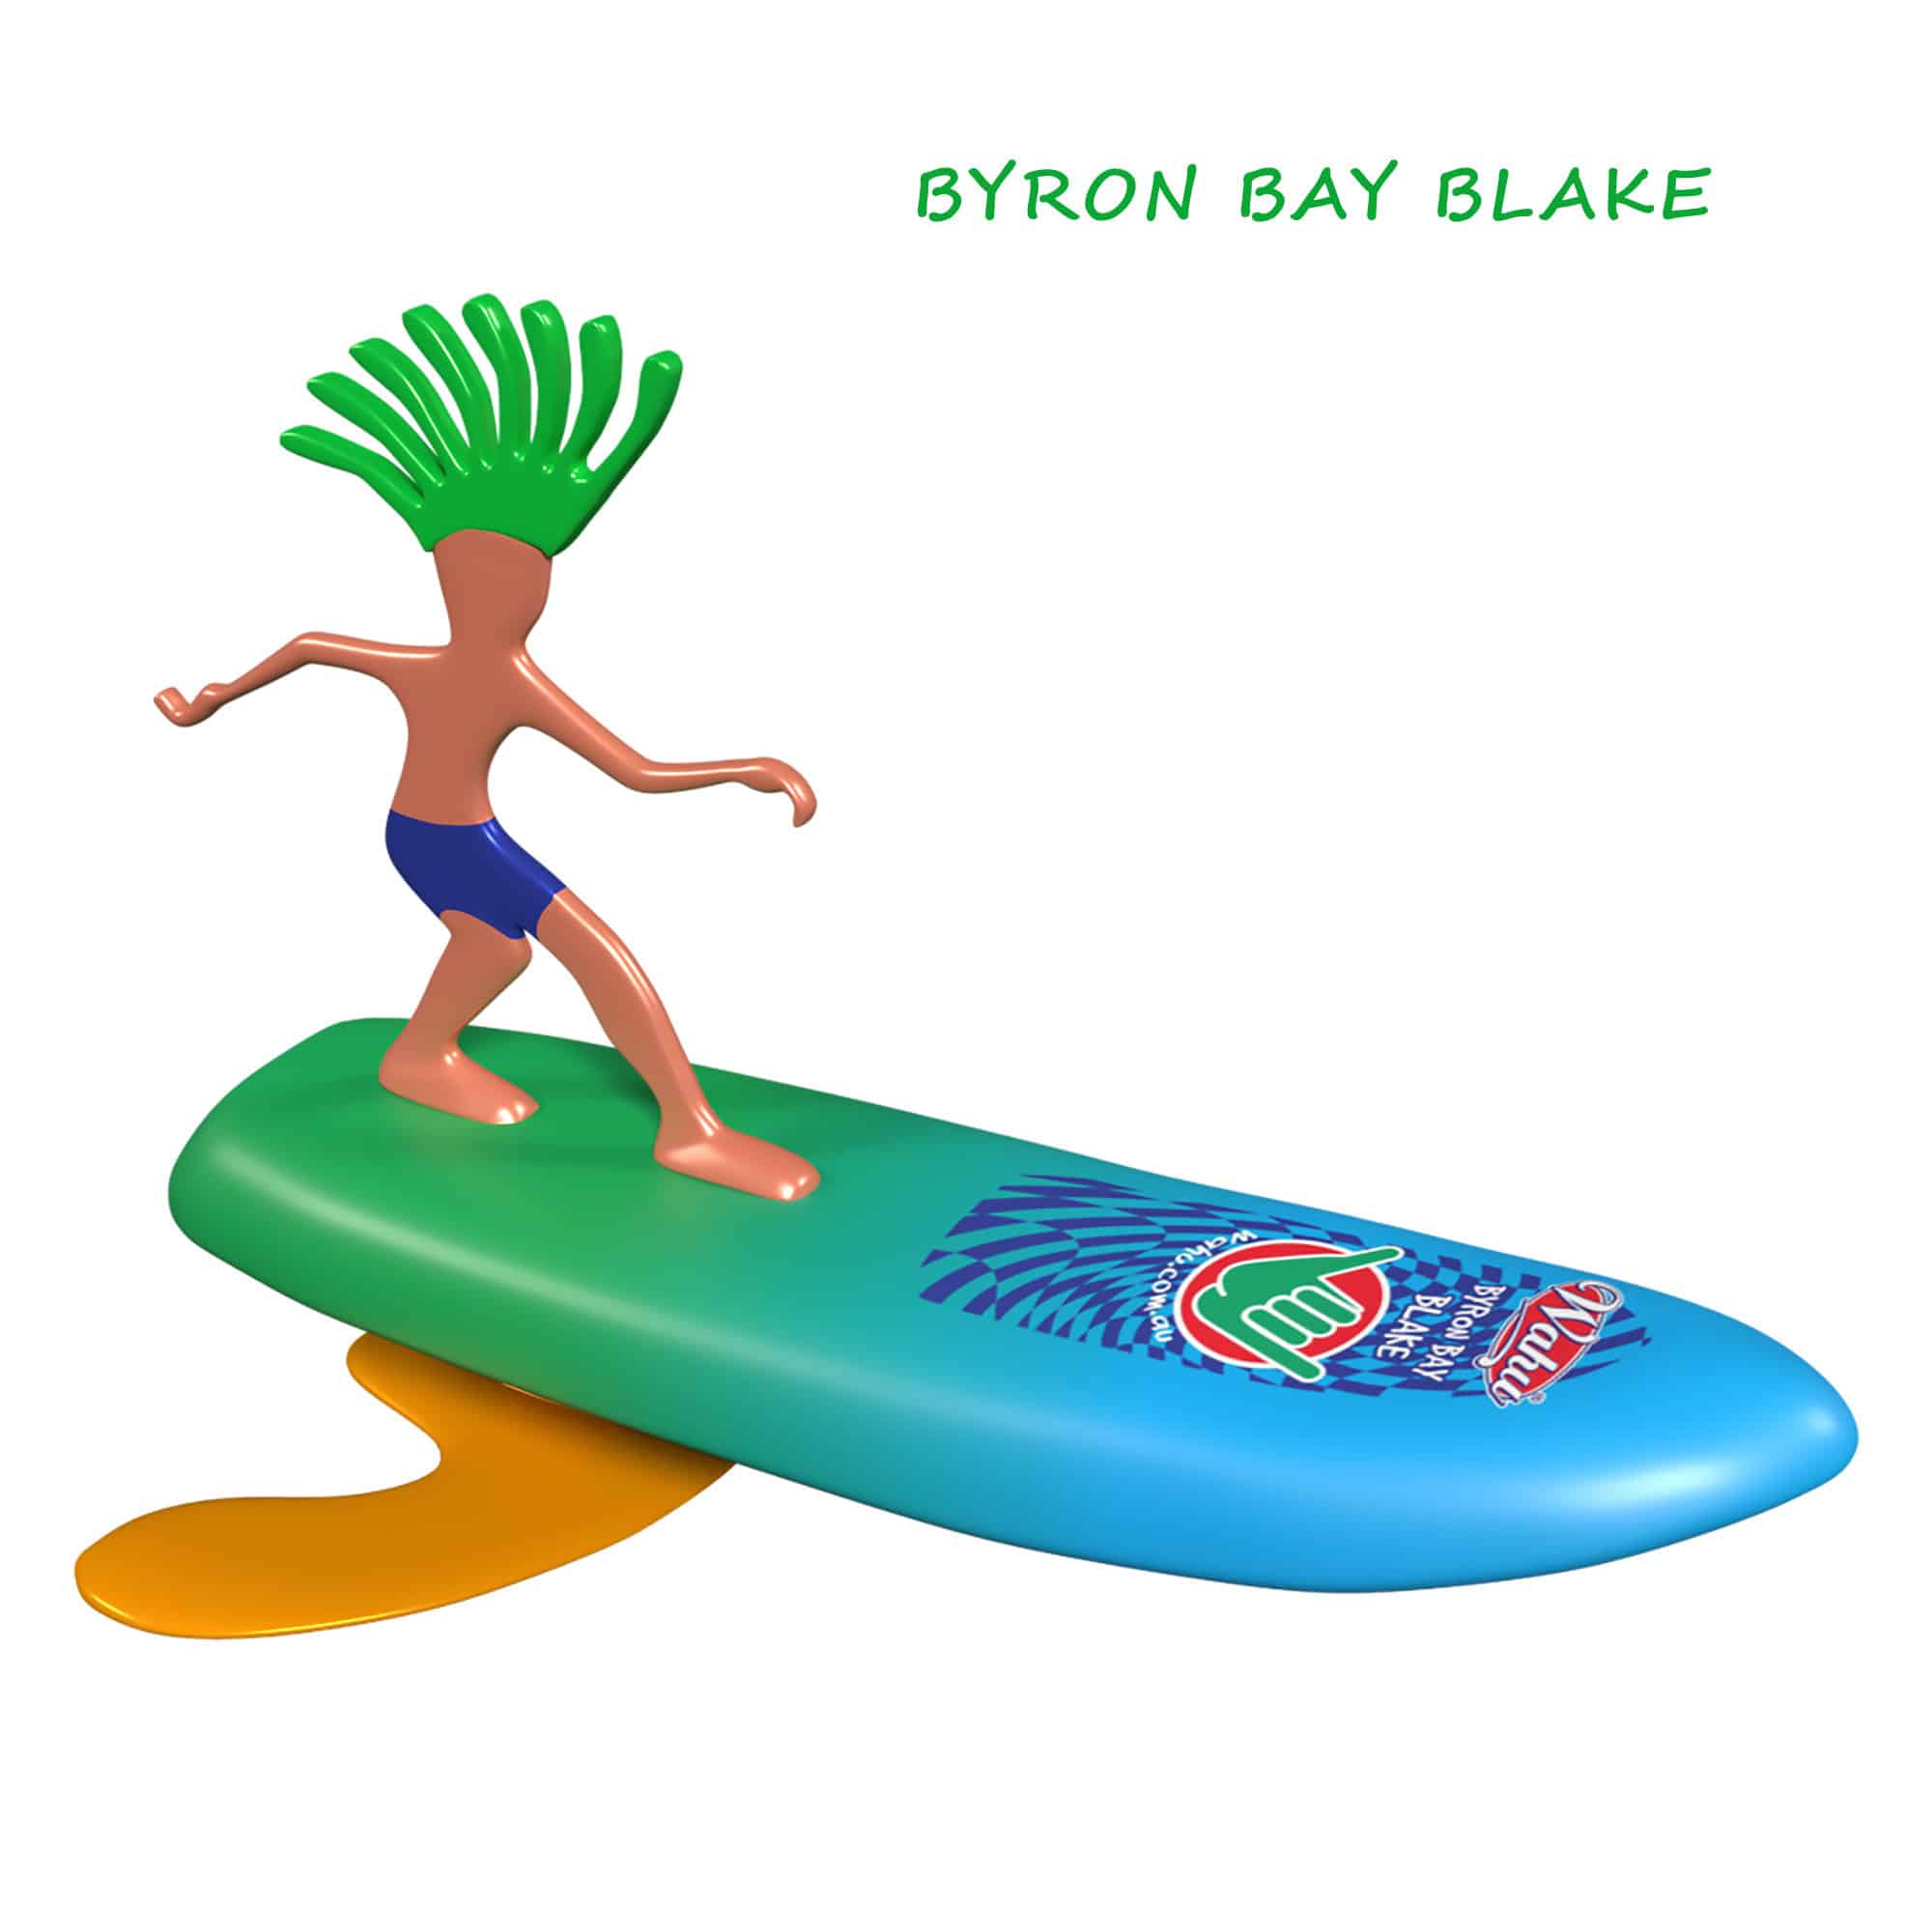 Wahu - Surfer Dudes - Byron Bay Blake